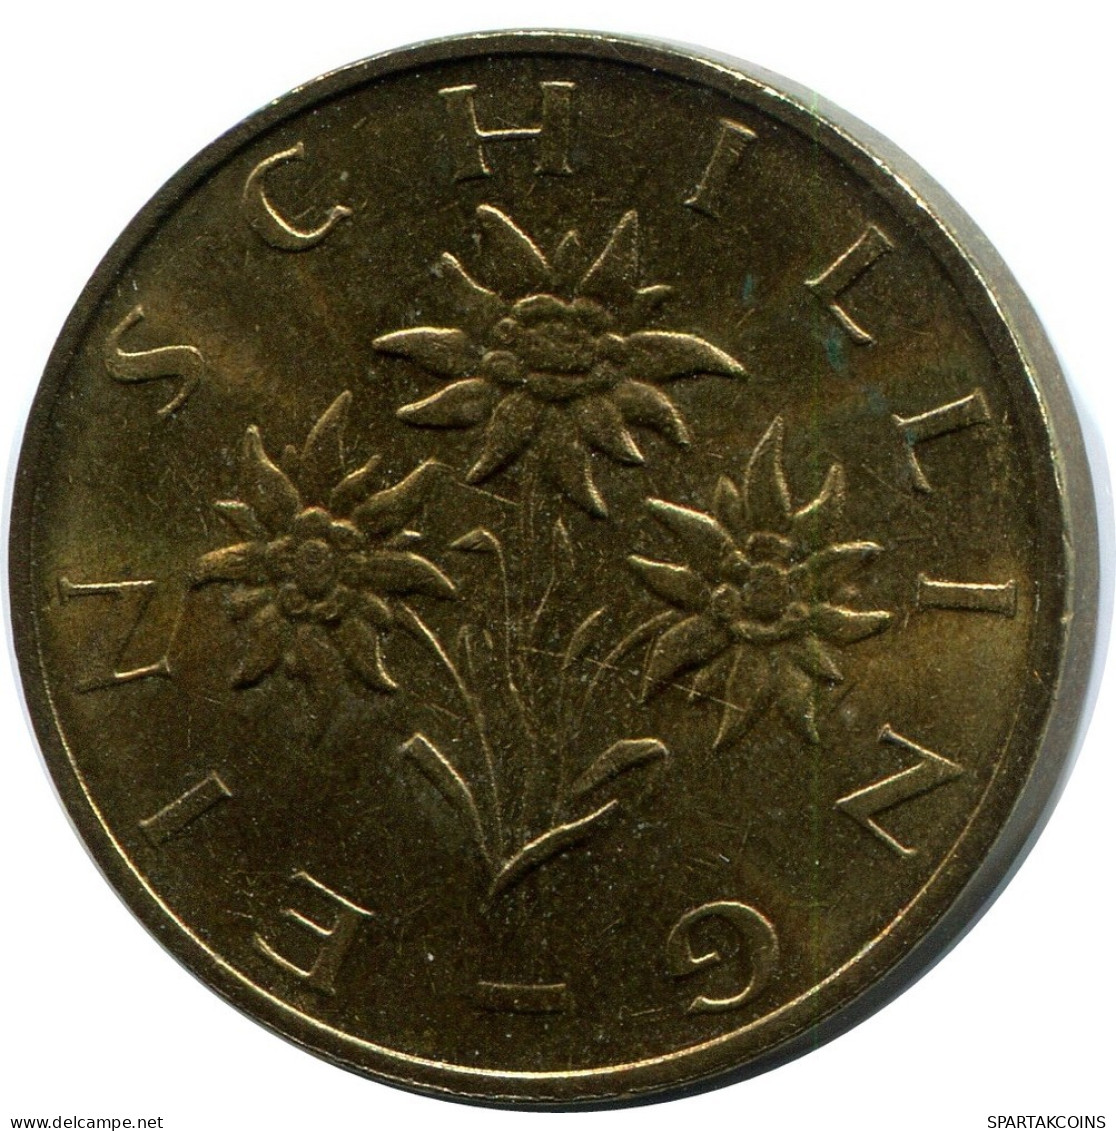 1 SCHILLING 1996 AUSTRIA Coin #AZ556.U.A - Austria